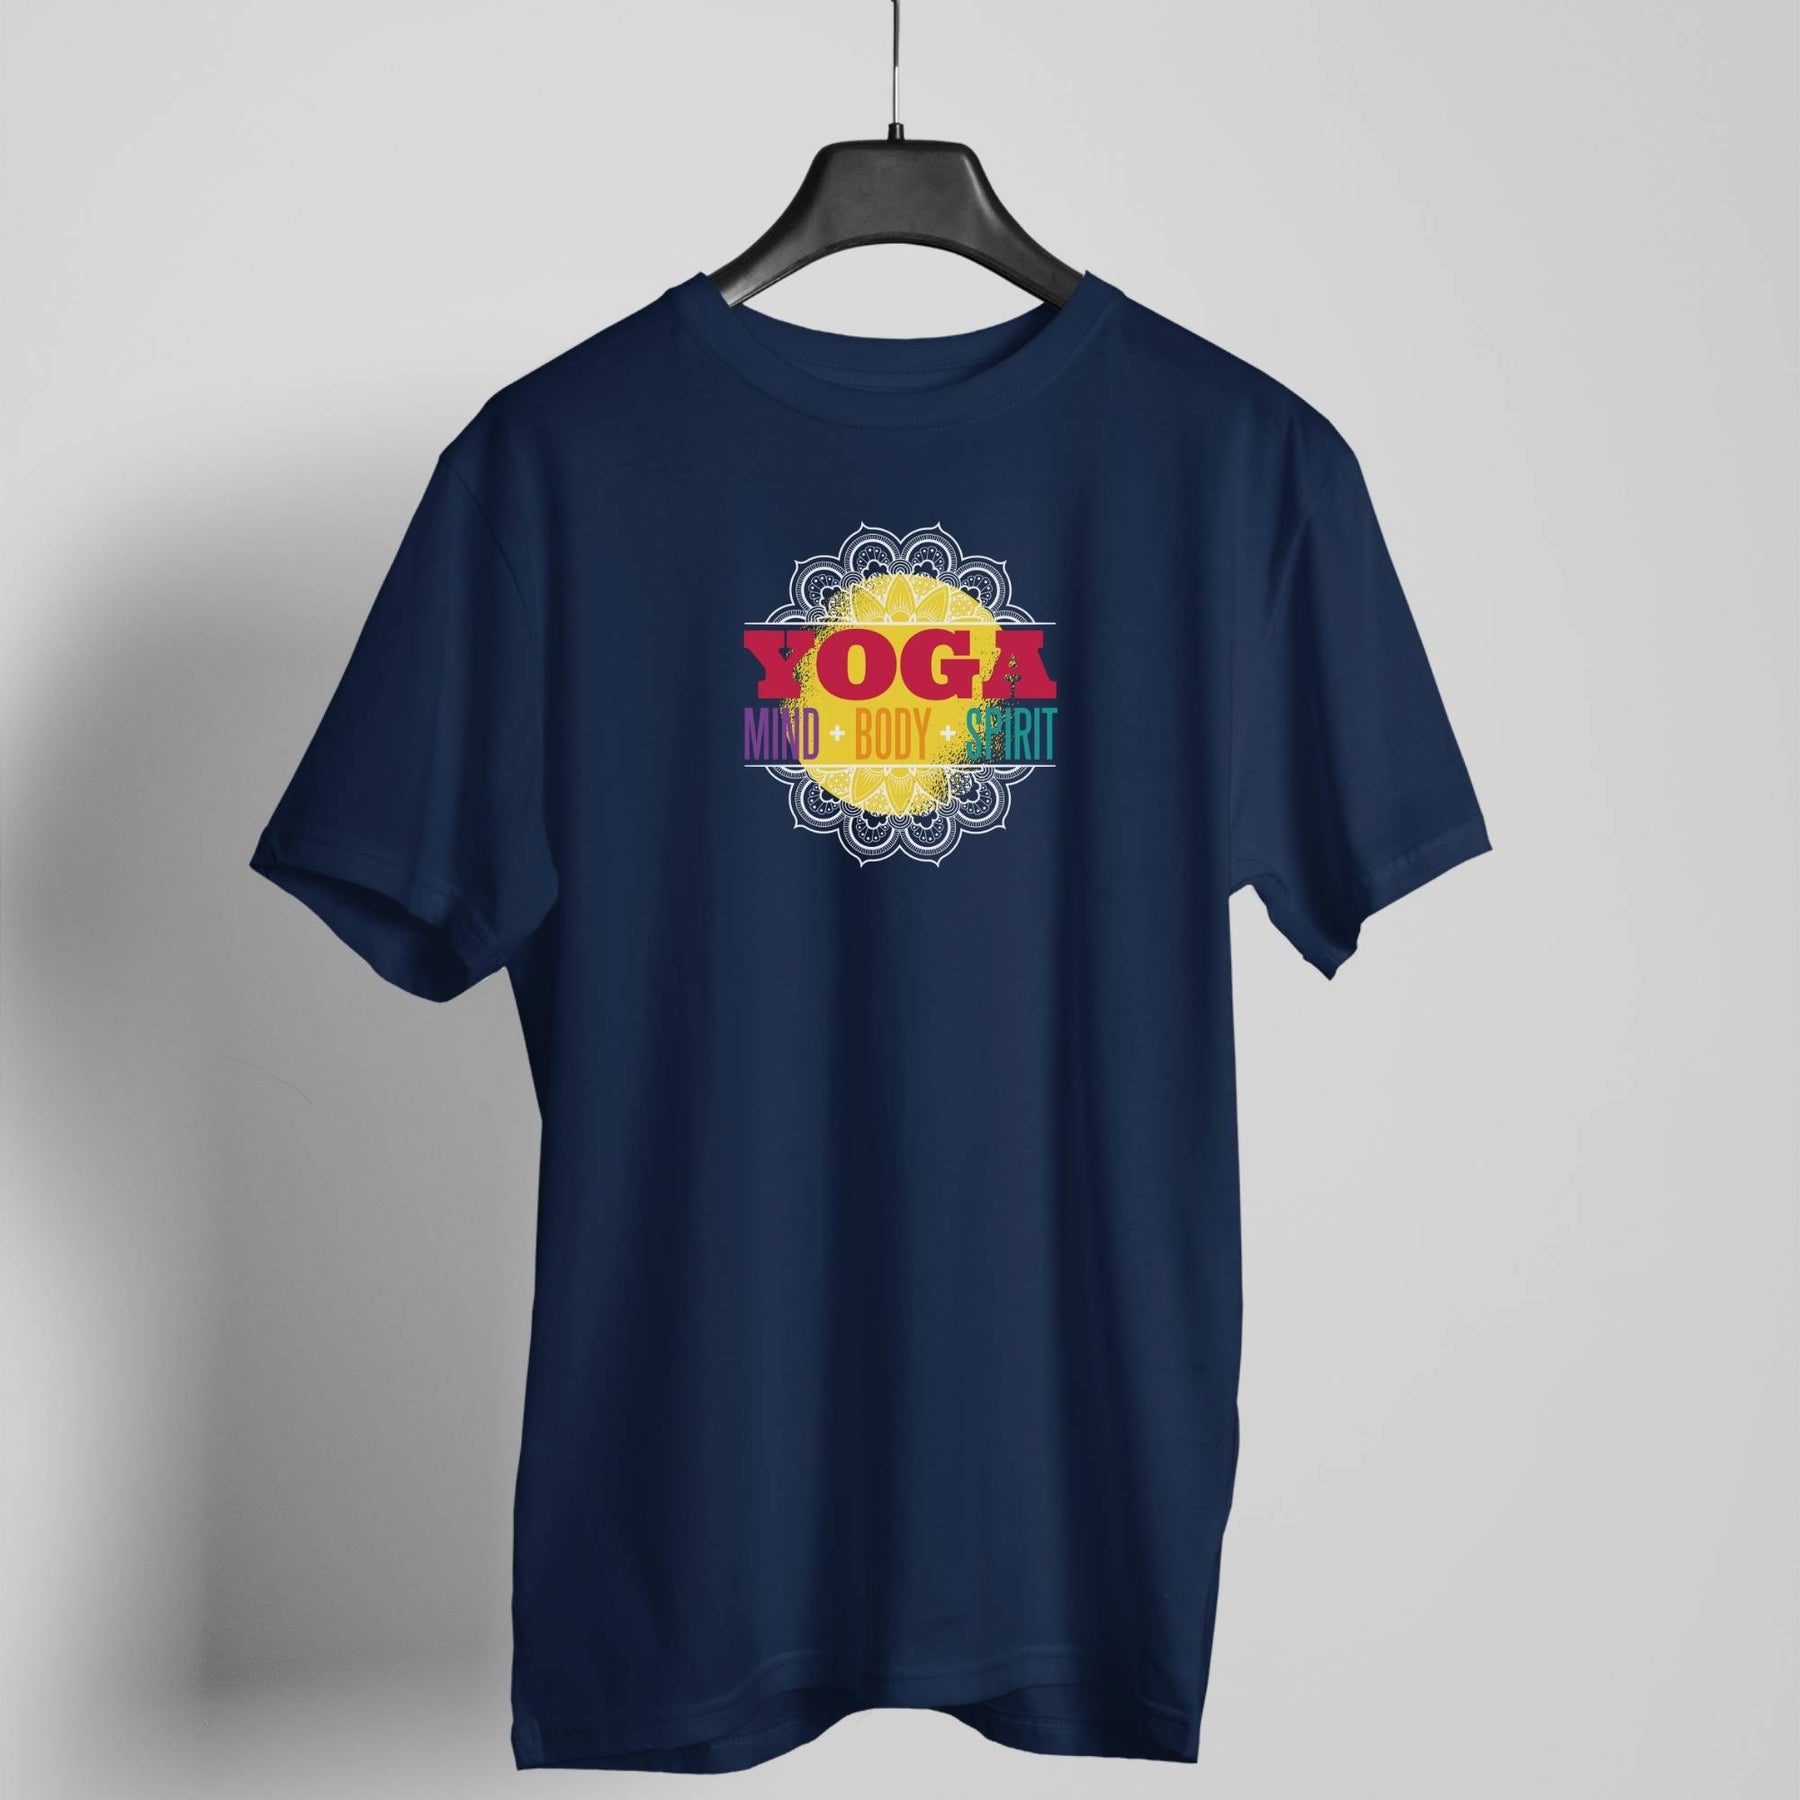 Mind Body Spirit Yoga navy blue t-shirt